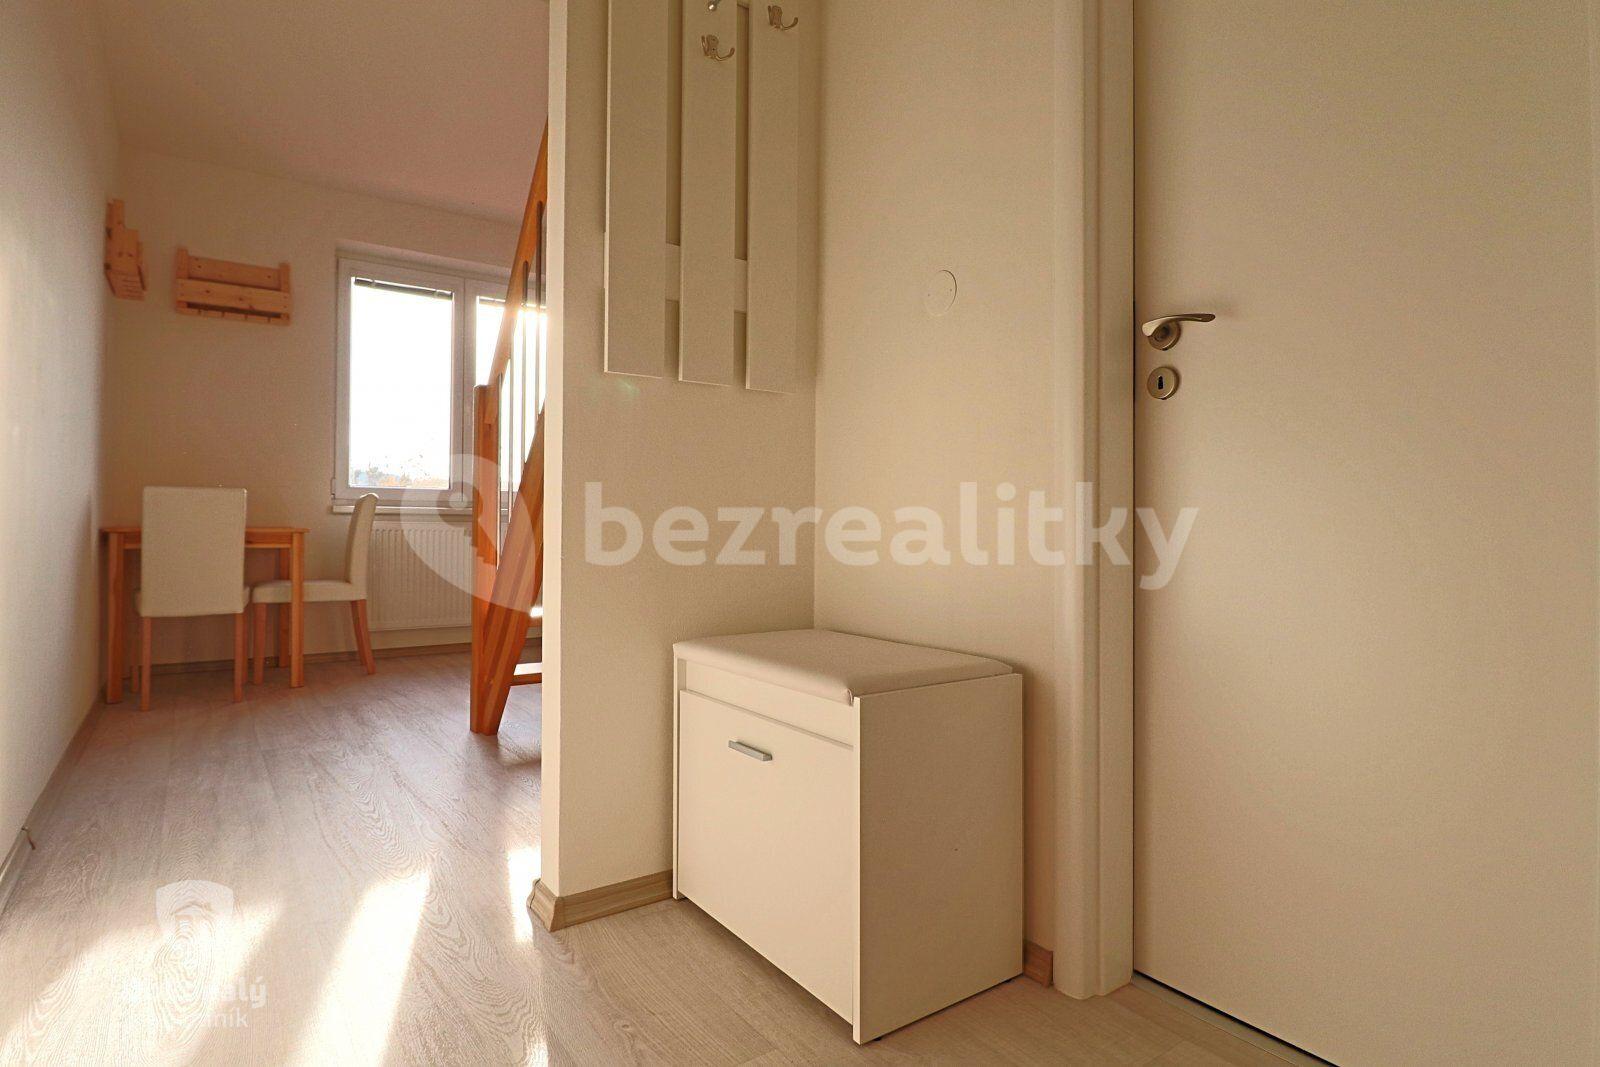 1 bedroom with open-plan kitchen flat to rent, 39 m², Herejkova, Starý Plzenec, Plzeňský Region